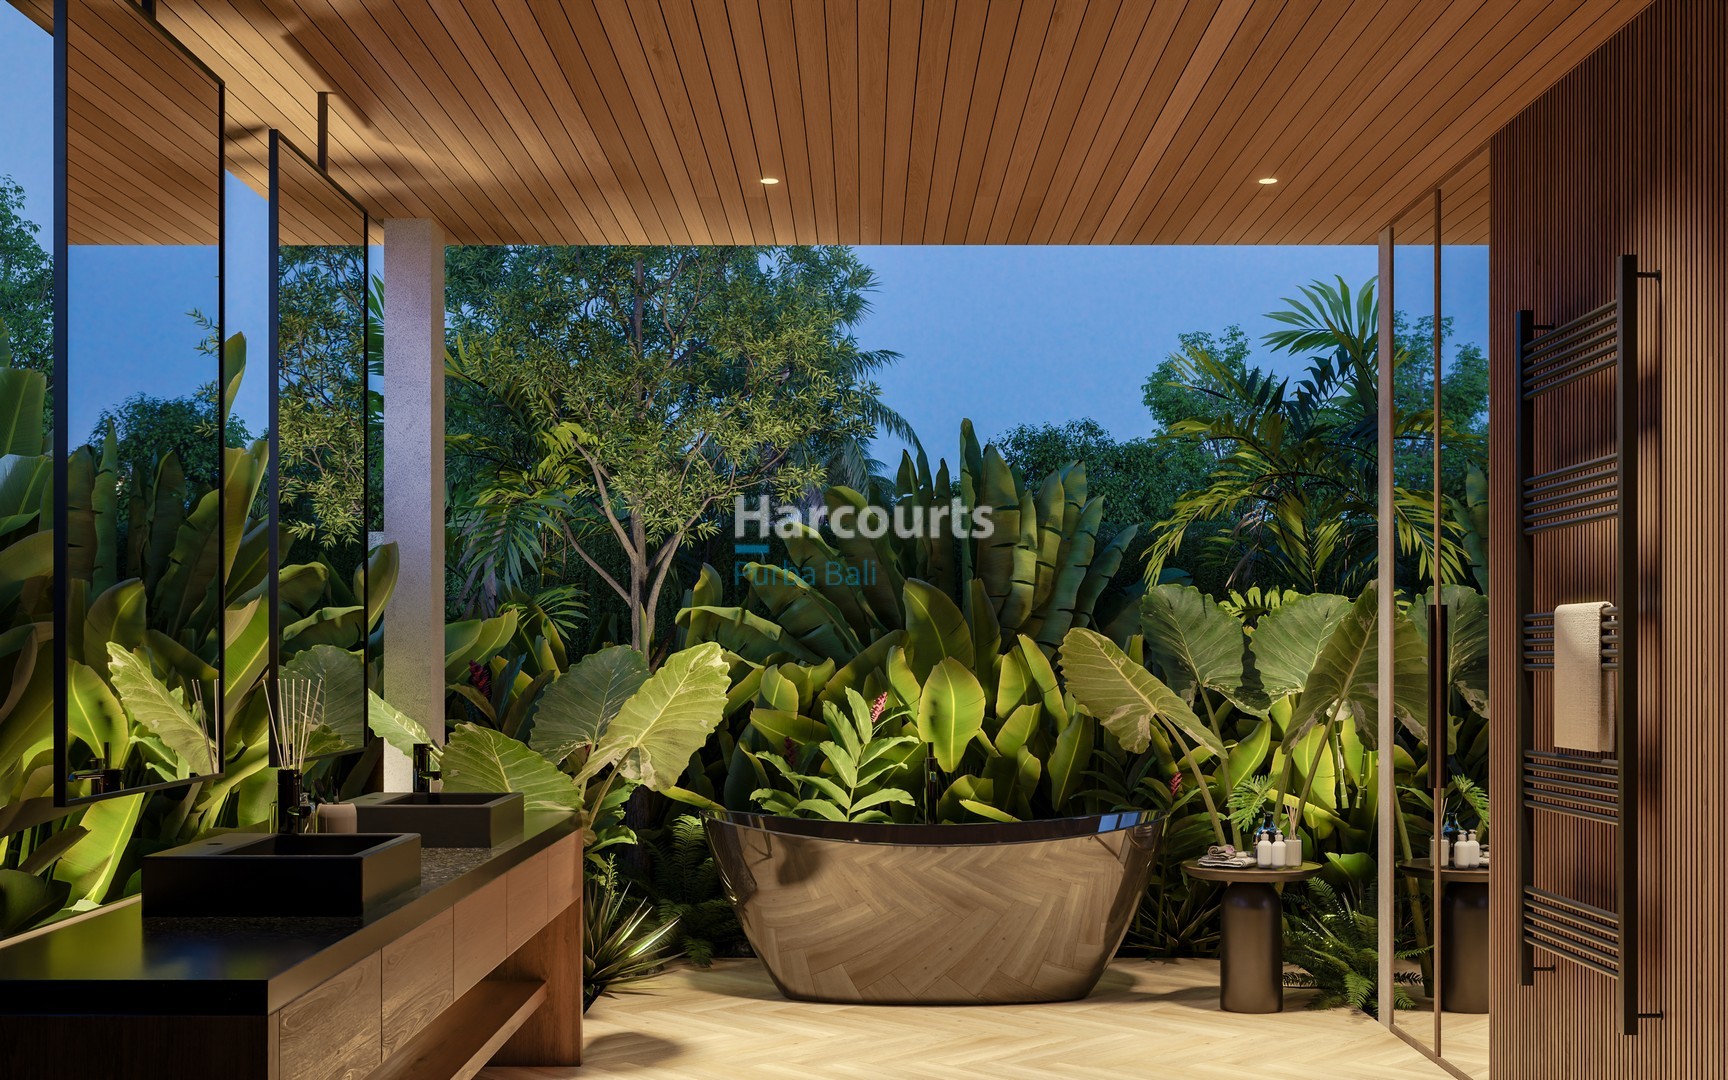 New Off-Plan Investment Opportunity in Ungasan, Uluwatu Cliff Luxury Villas, Melasti, Bali